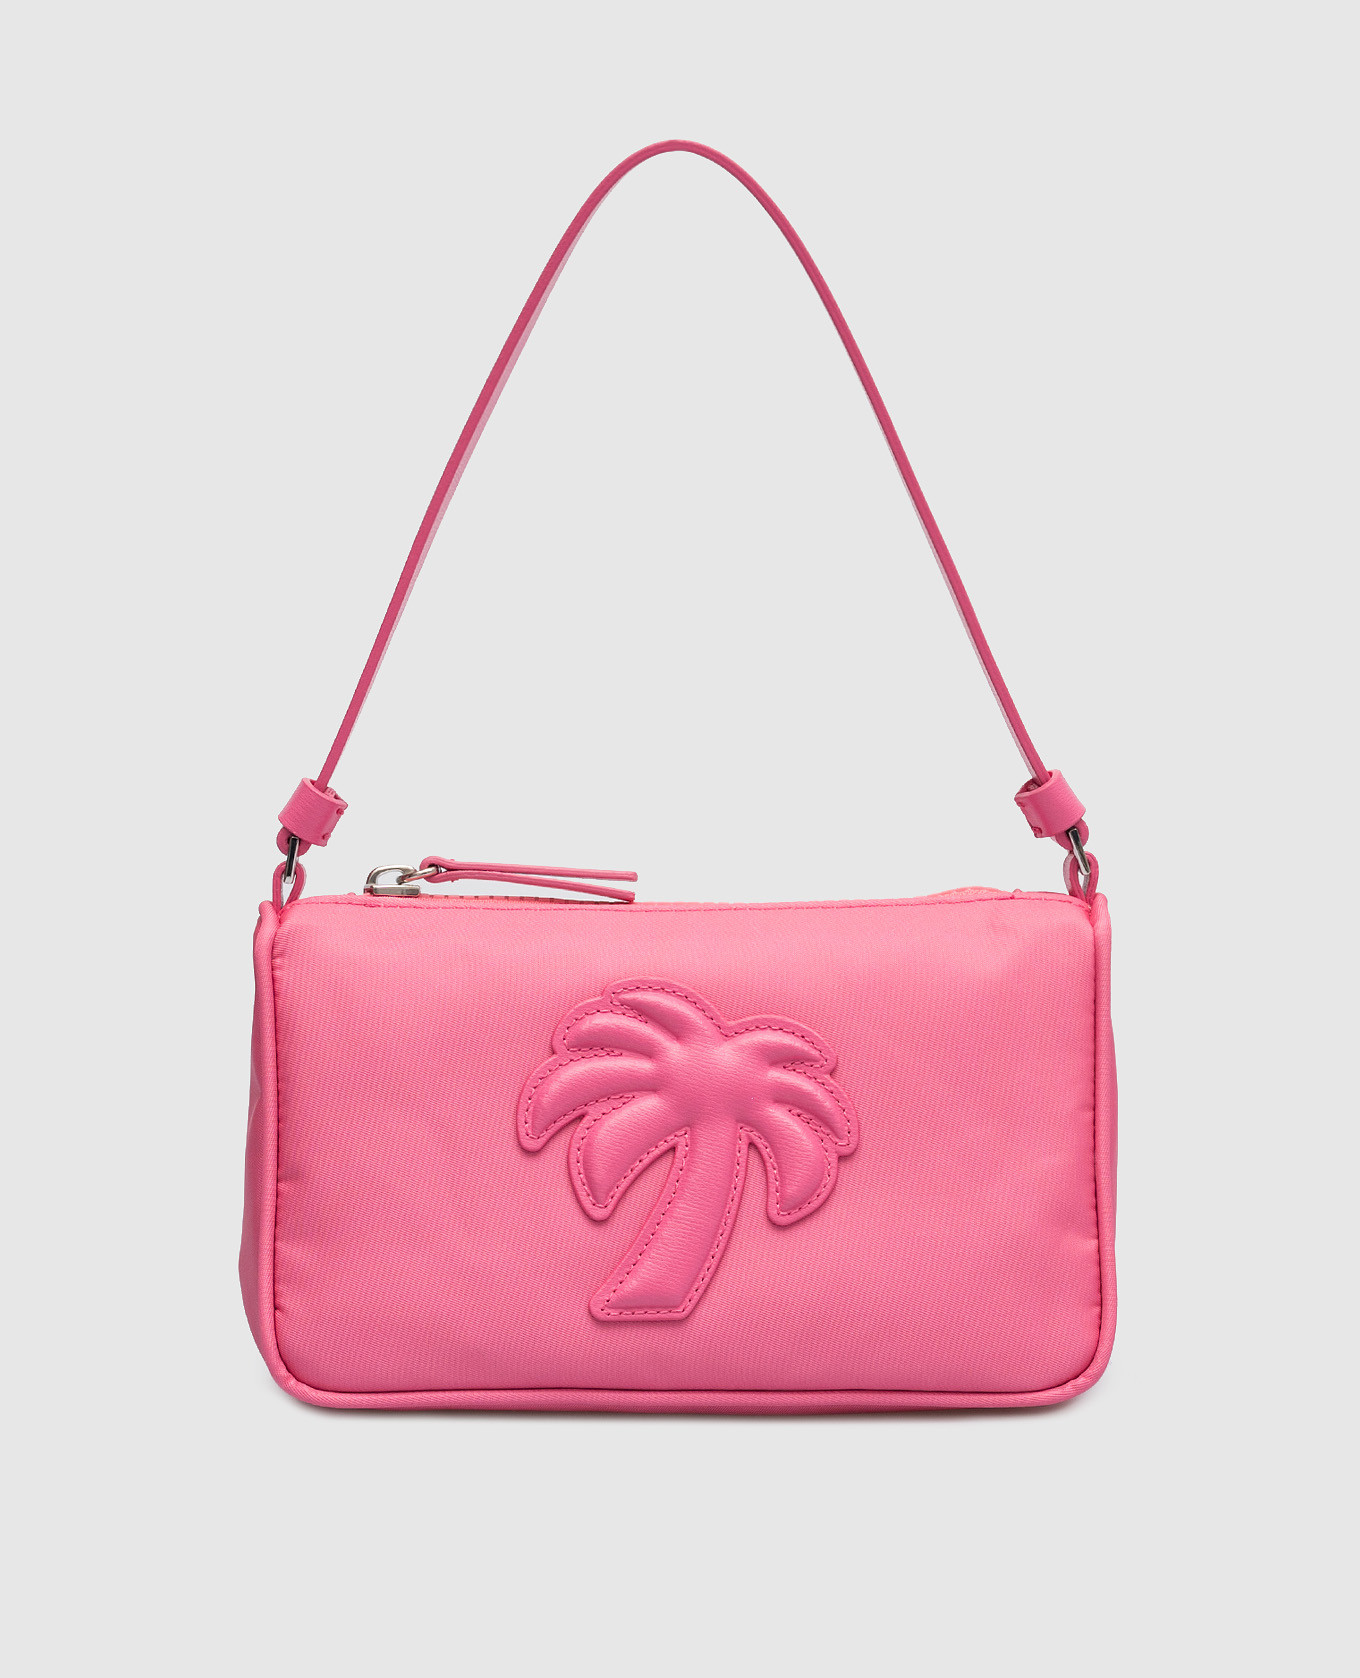 Big Palm mini pink bag